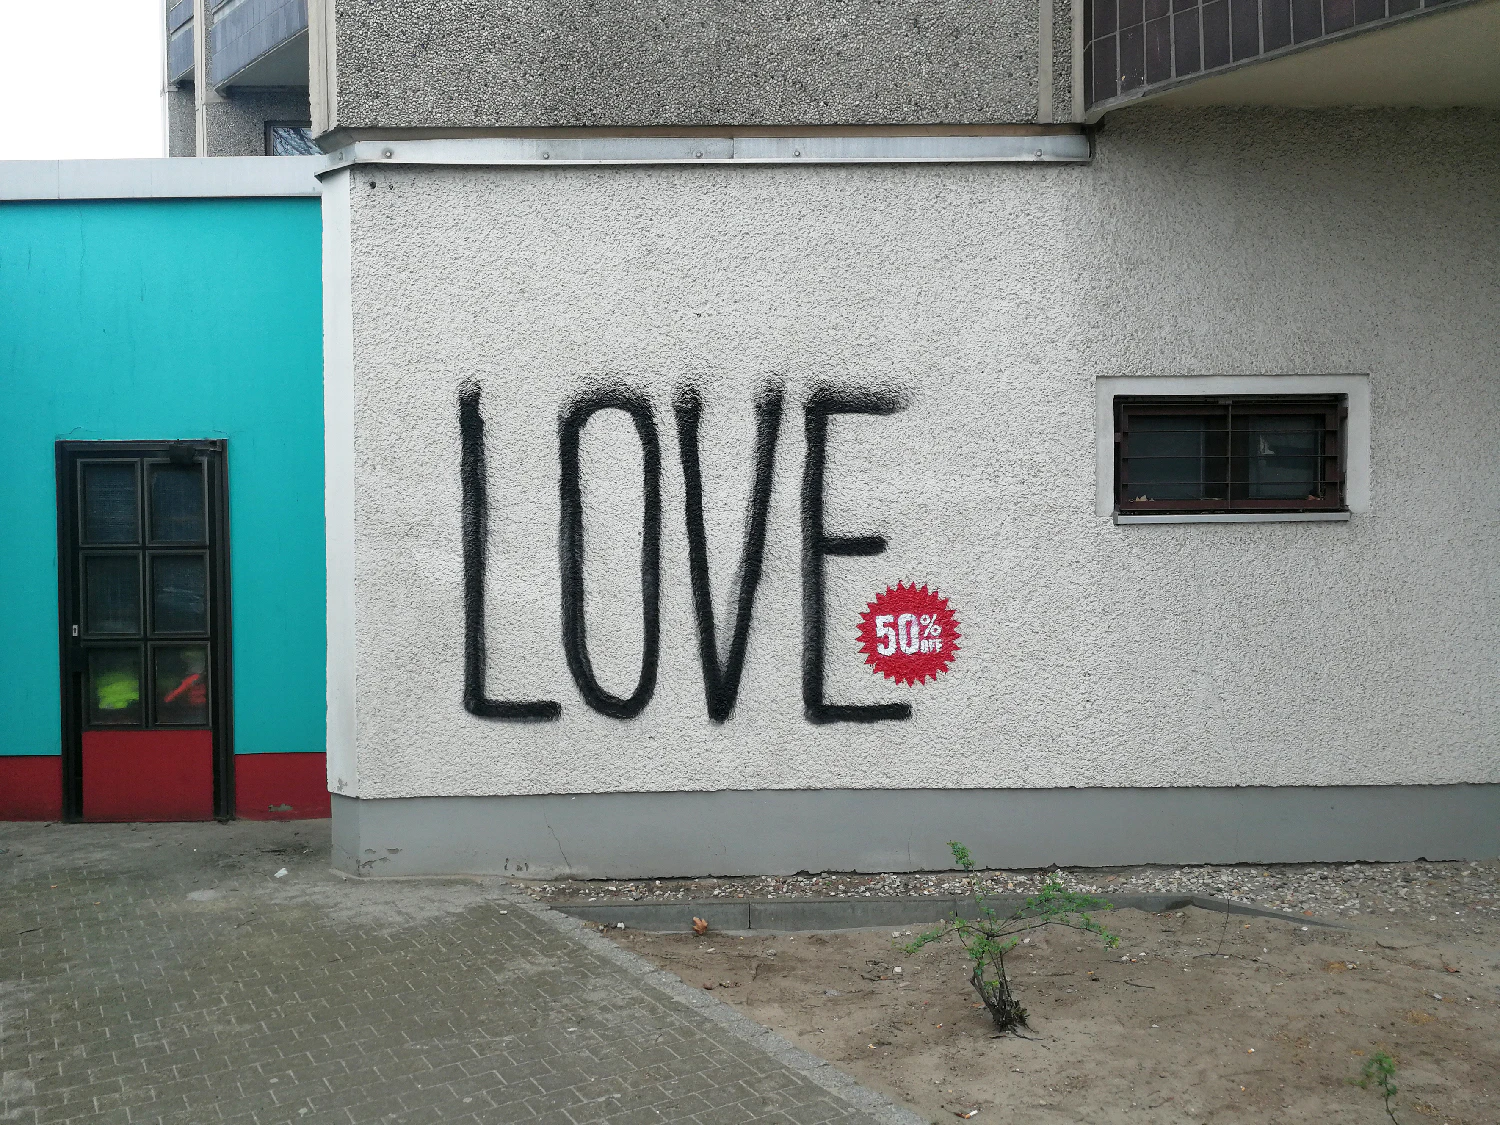 Discount on love - Graffiti art 